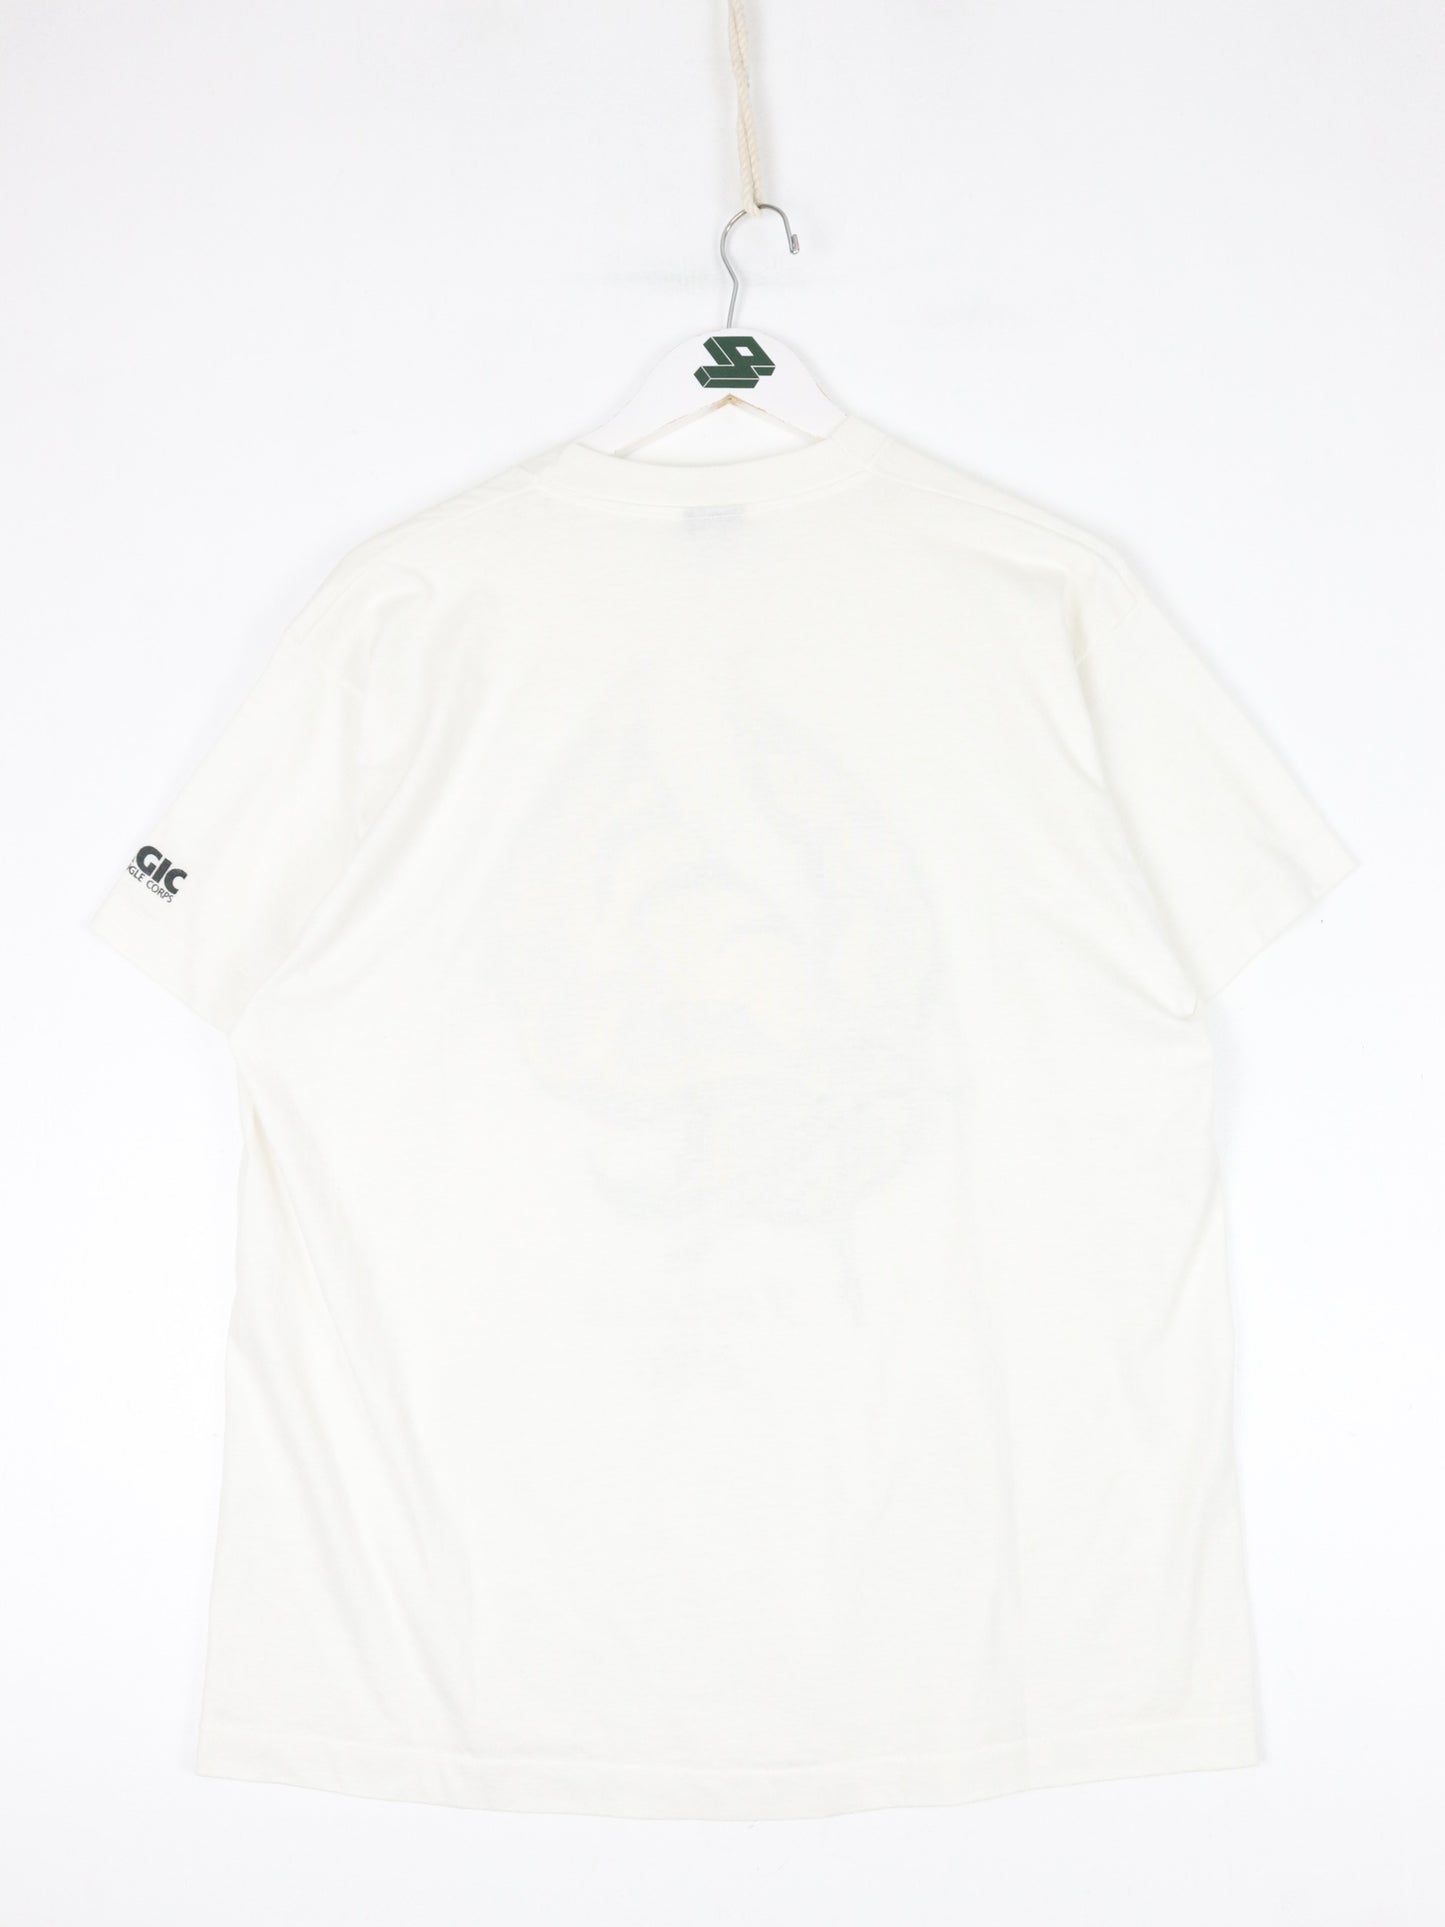 Vintage Fantasia T Shirt Fits Mens Large White 90s